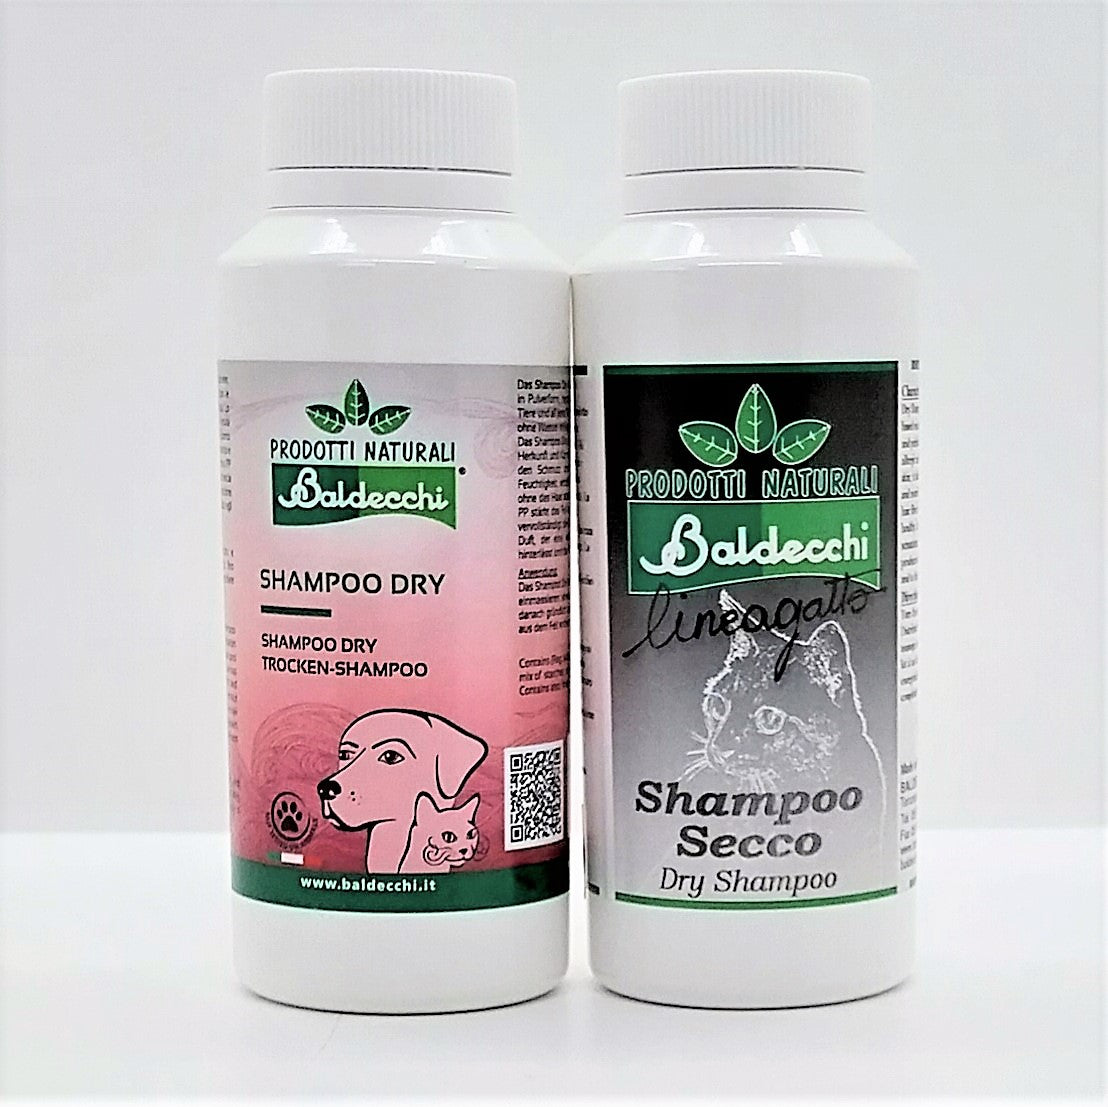 Baldecchi Shampoo a Secco, Shampoo Dry, Trockenshampoo Puder für Hund und Katze, 100g